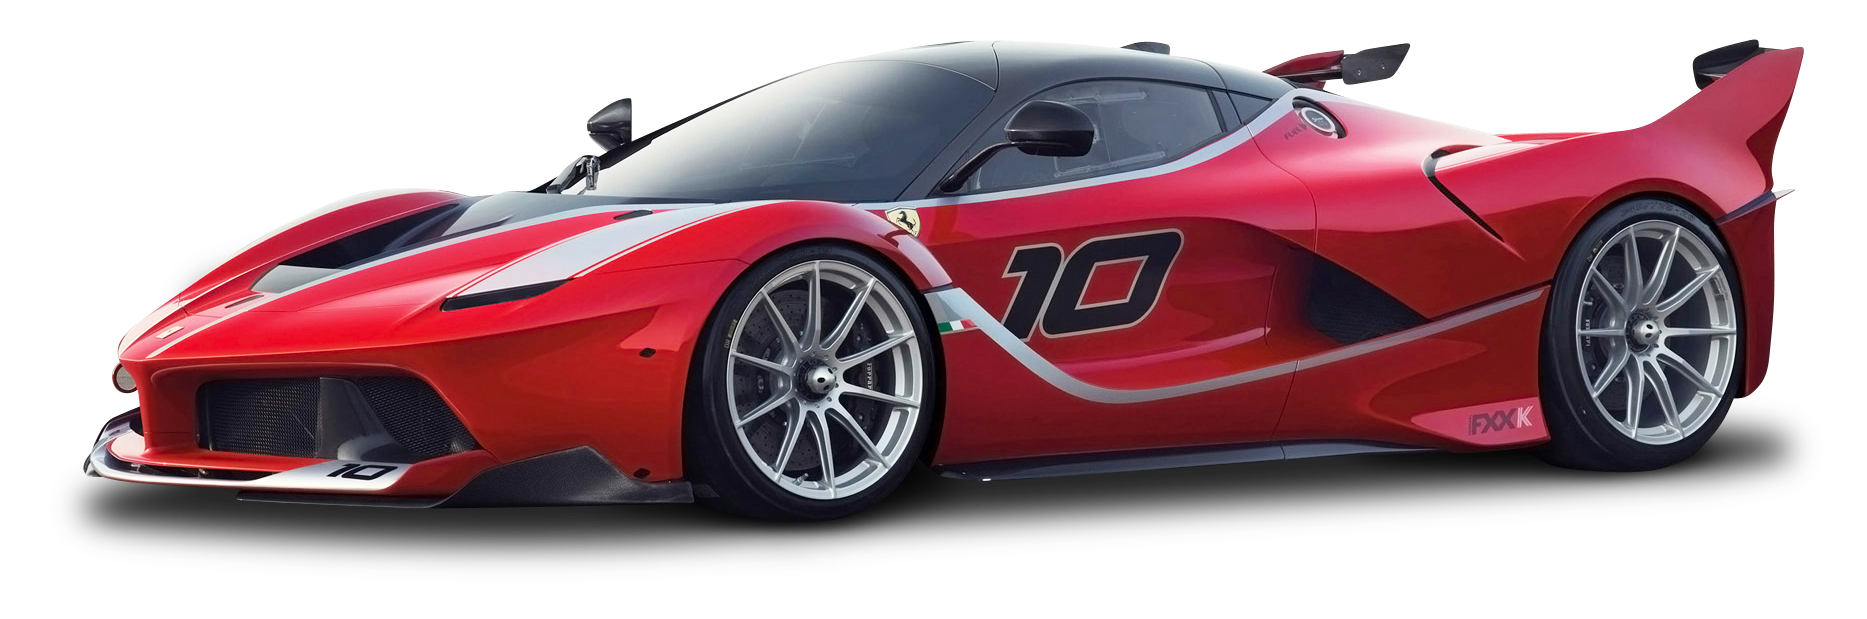 Ferrari FXX K Race Car